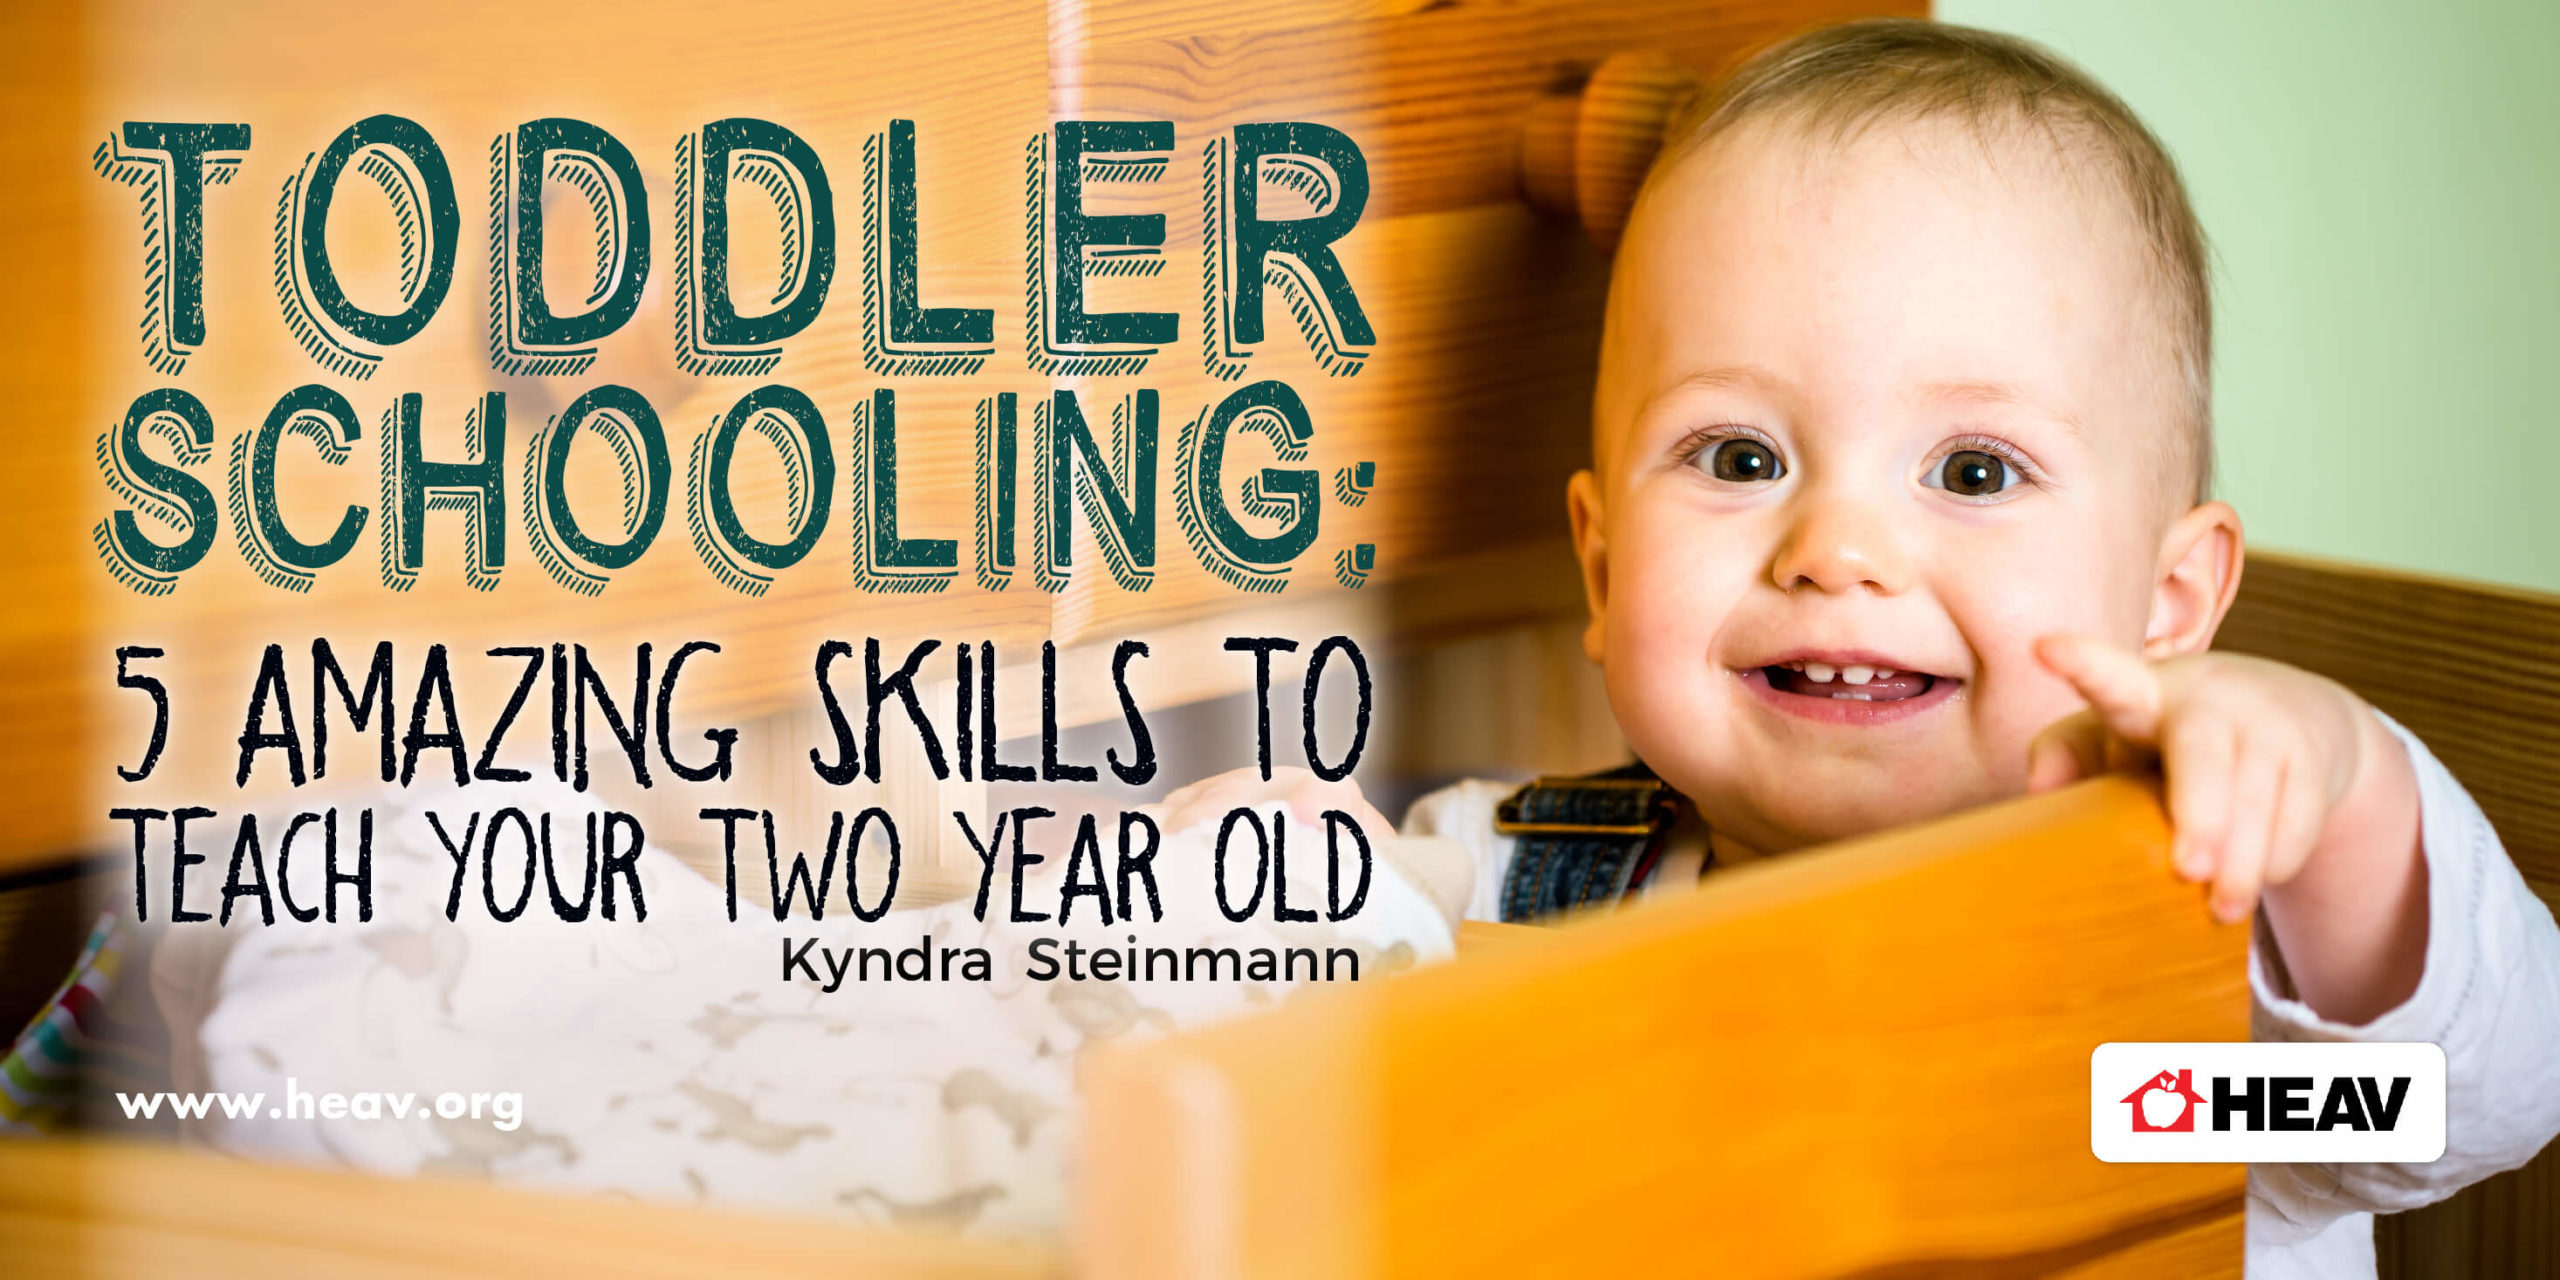 Kyndra Steinmann-toddler schooling- toddler pointing